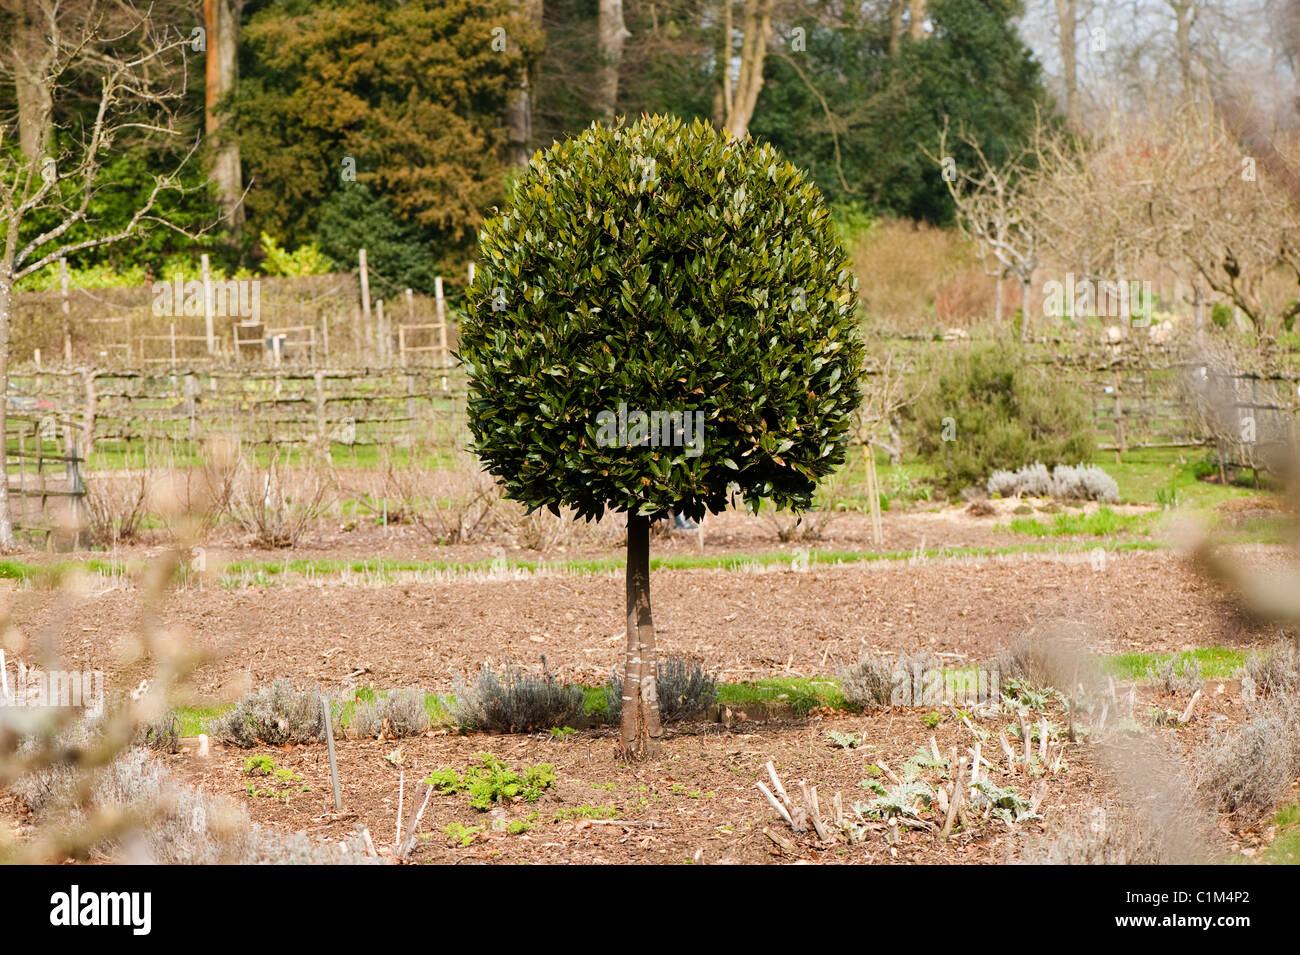 Standard Bay Tree, Laurus nobilis, a Painswick Giardino rococò in Cotswolds Foto Stock